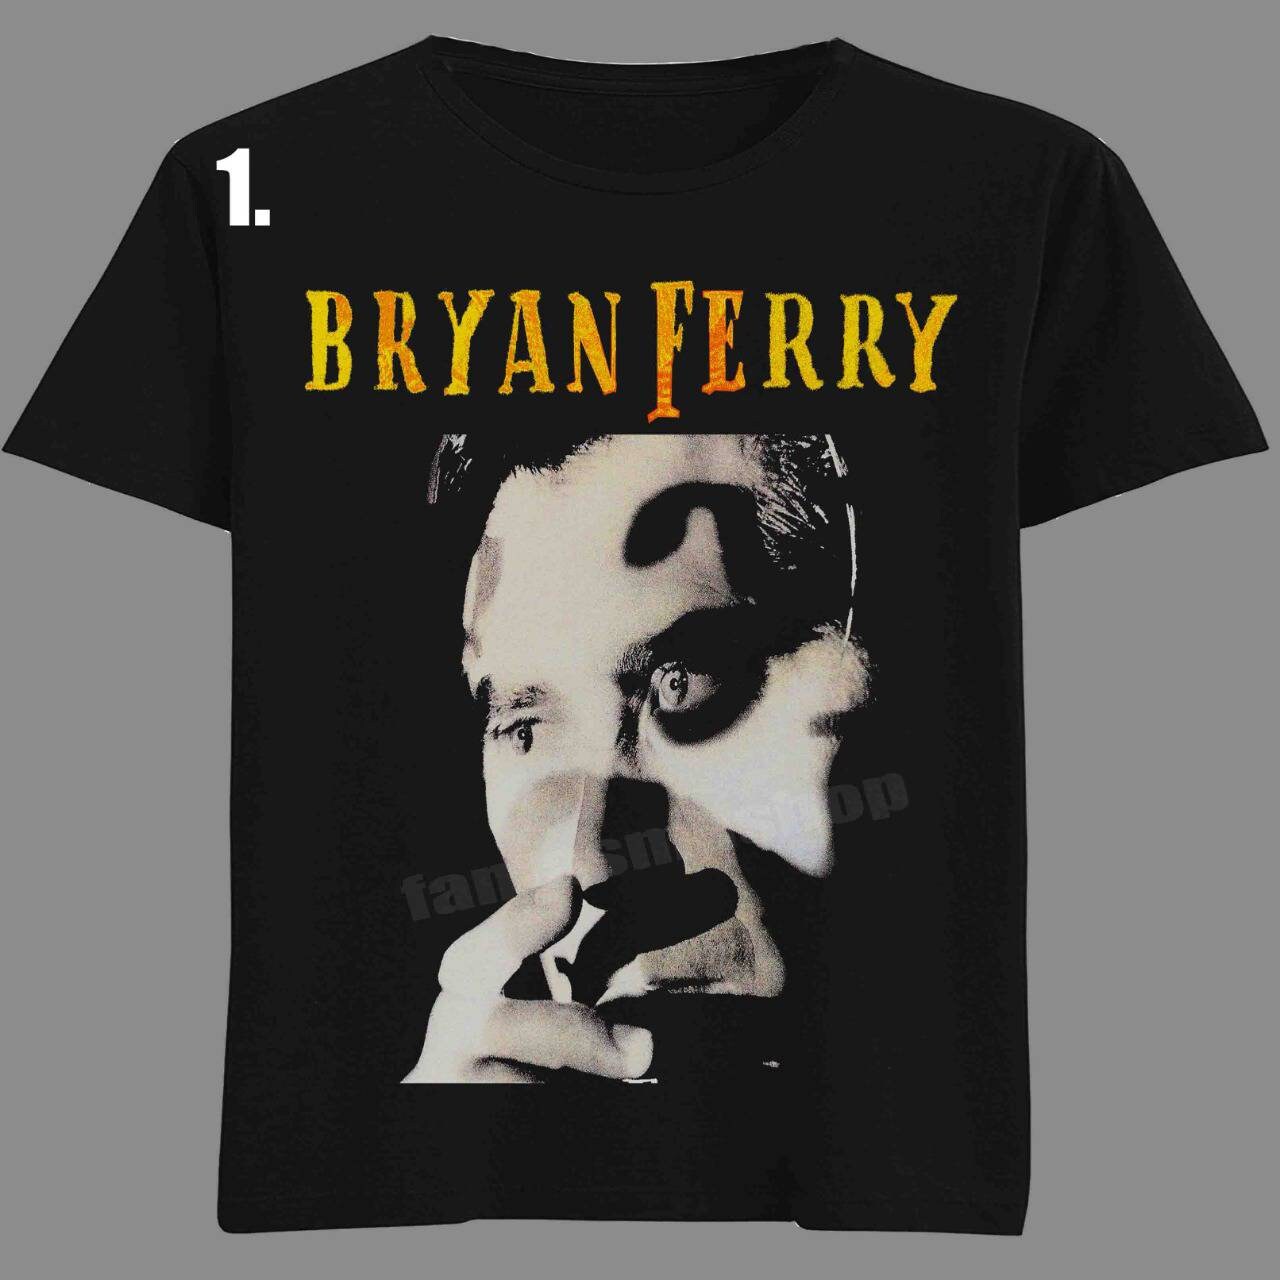 Kleding Gender-neutrale kleding volwassenen Tops & T-shirts T-shirts 1988 Bryan Ferry "Kiss and Tell" vintage Tour shirt 80s jaren 1980 Roxy muziek 